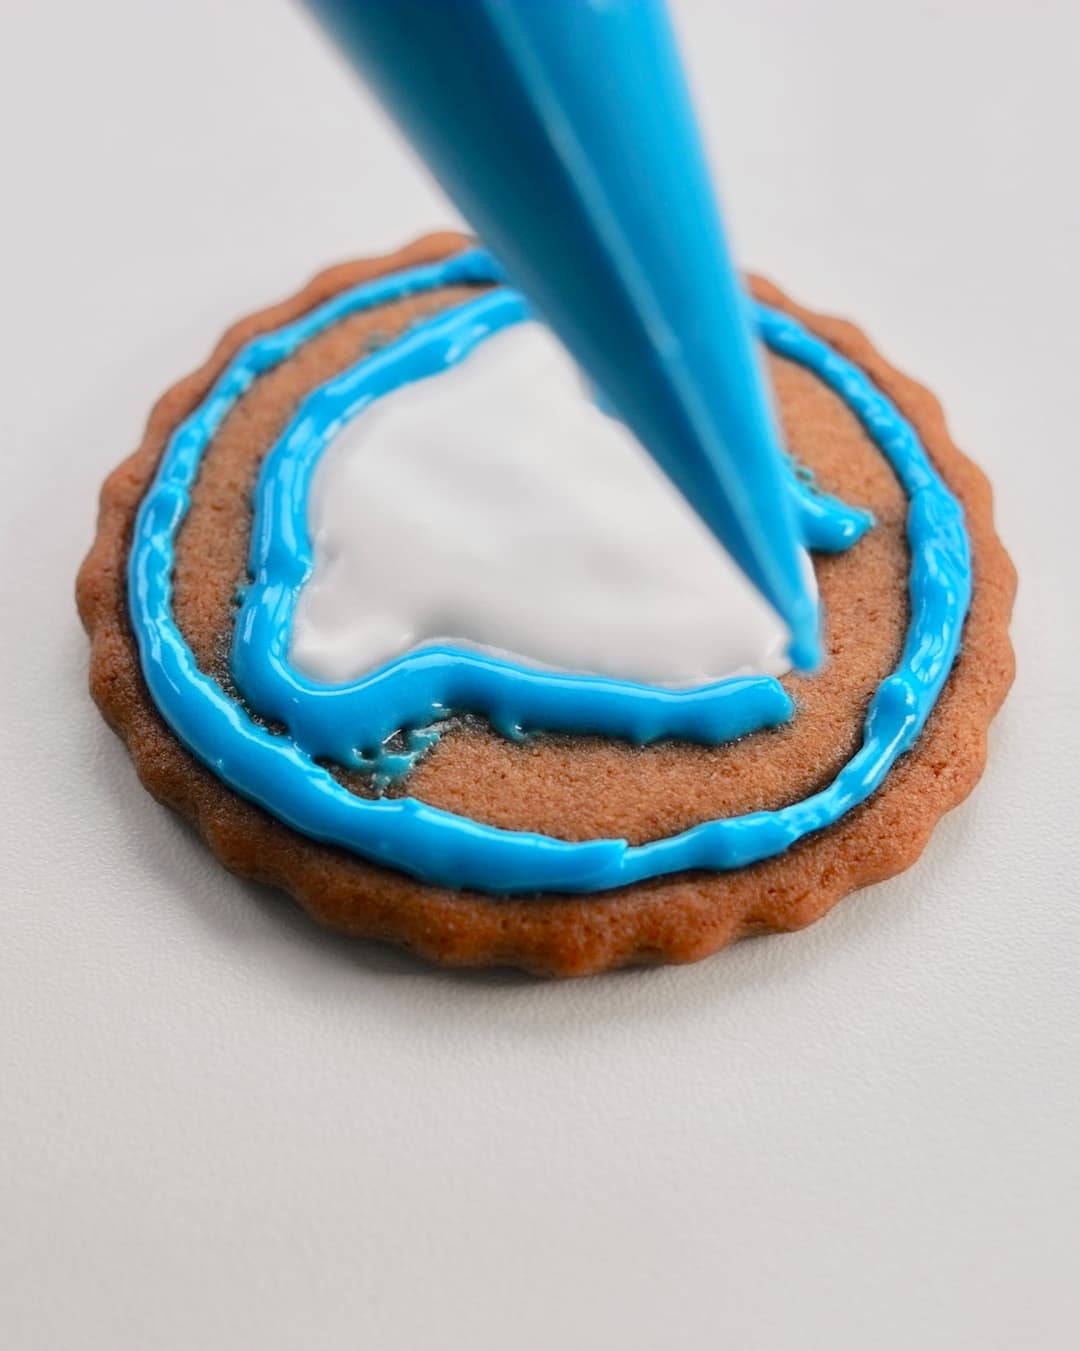 Blue gingerbread cookie